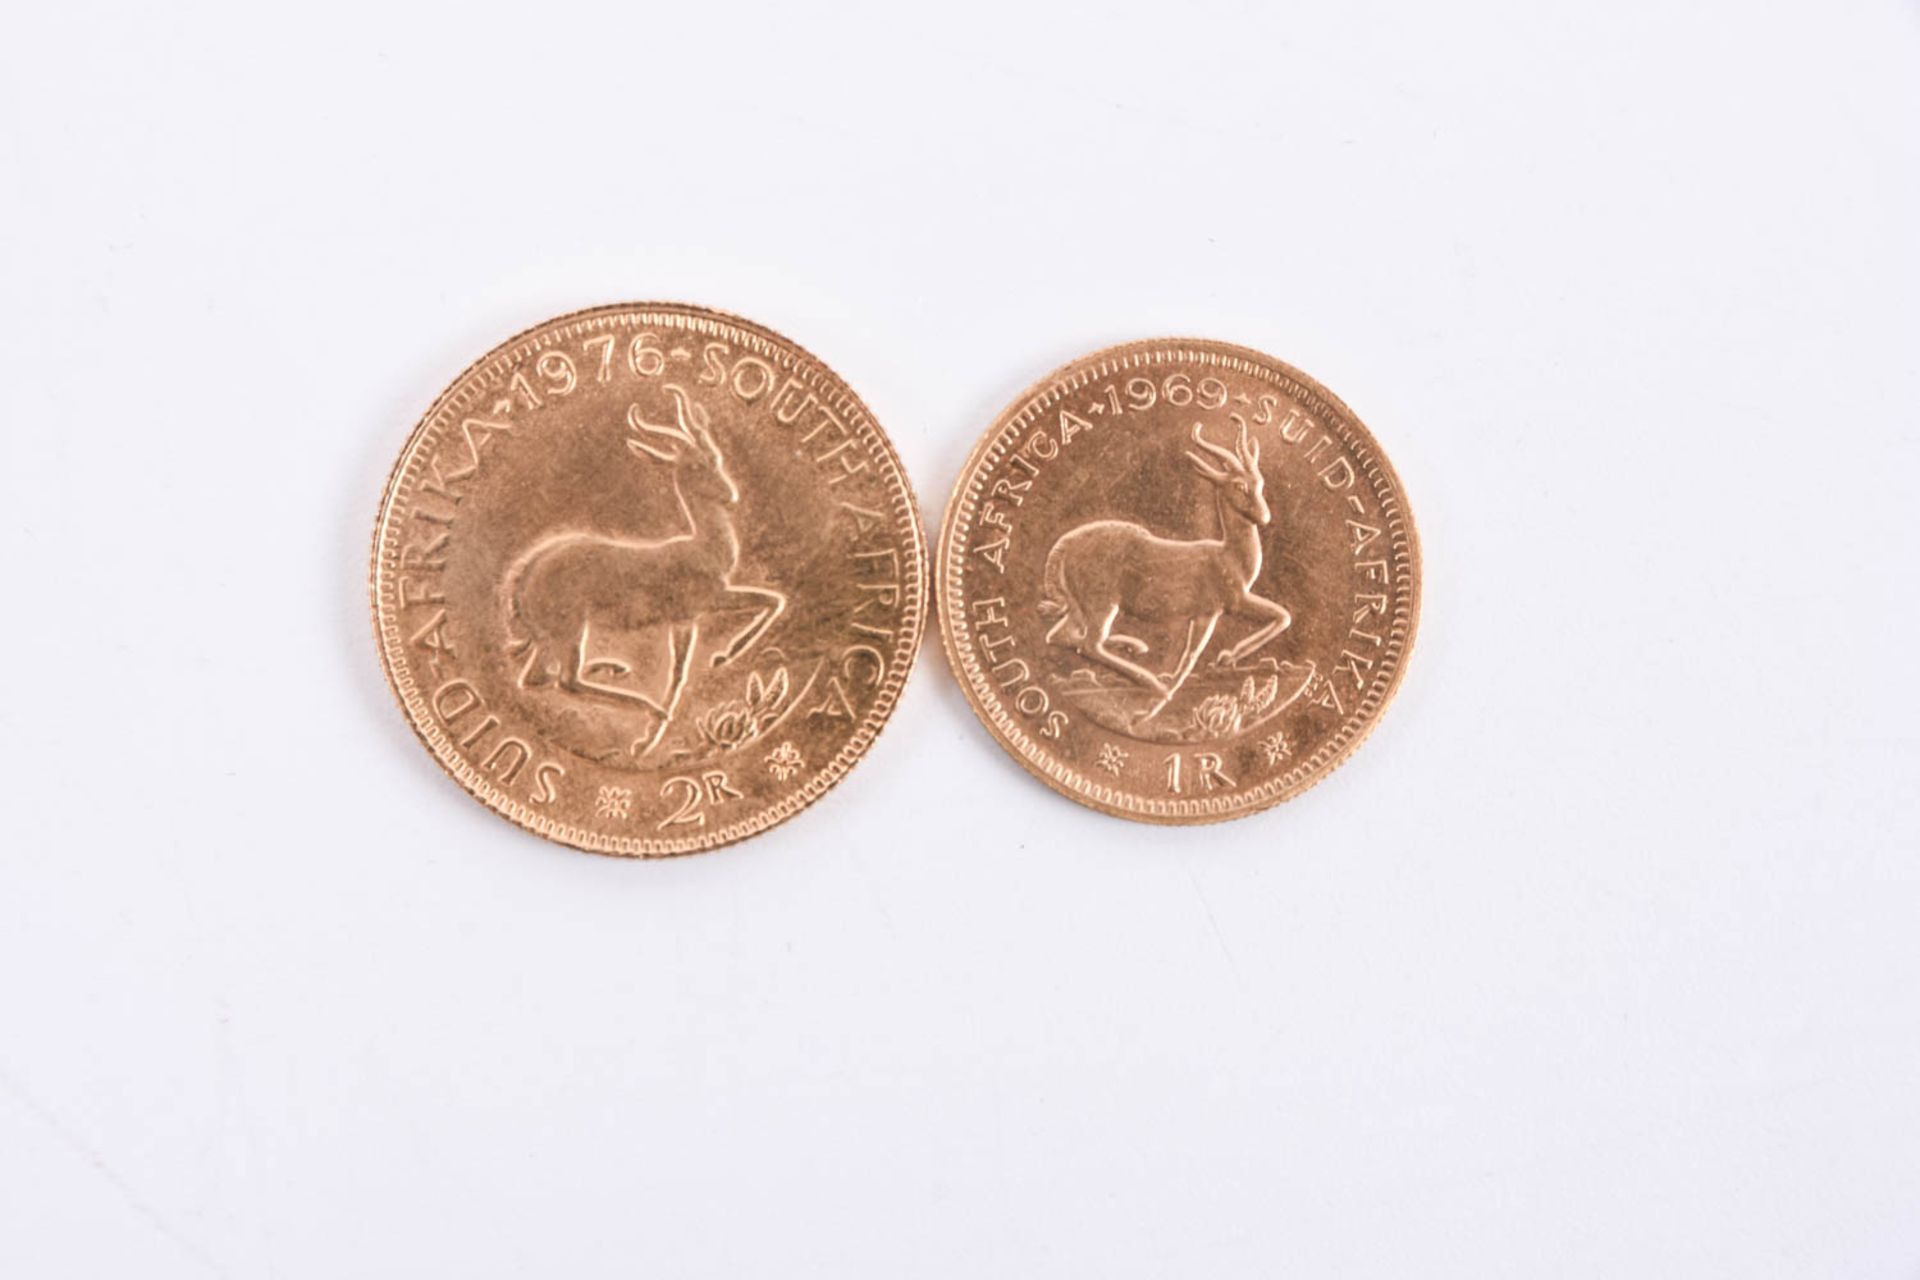 Südafrika 2 Rand 1976 Goldmünze u. Südafrika 1 Rand 1969 Goldmünze